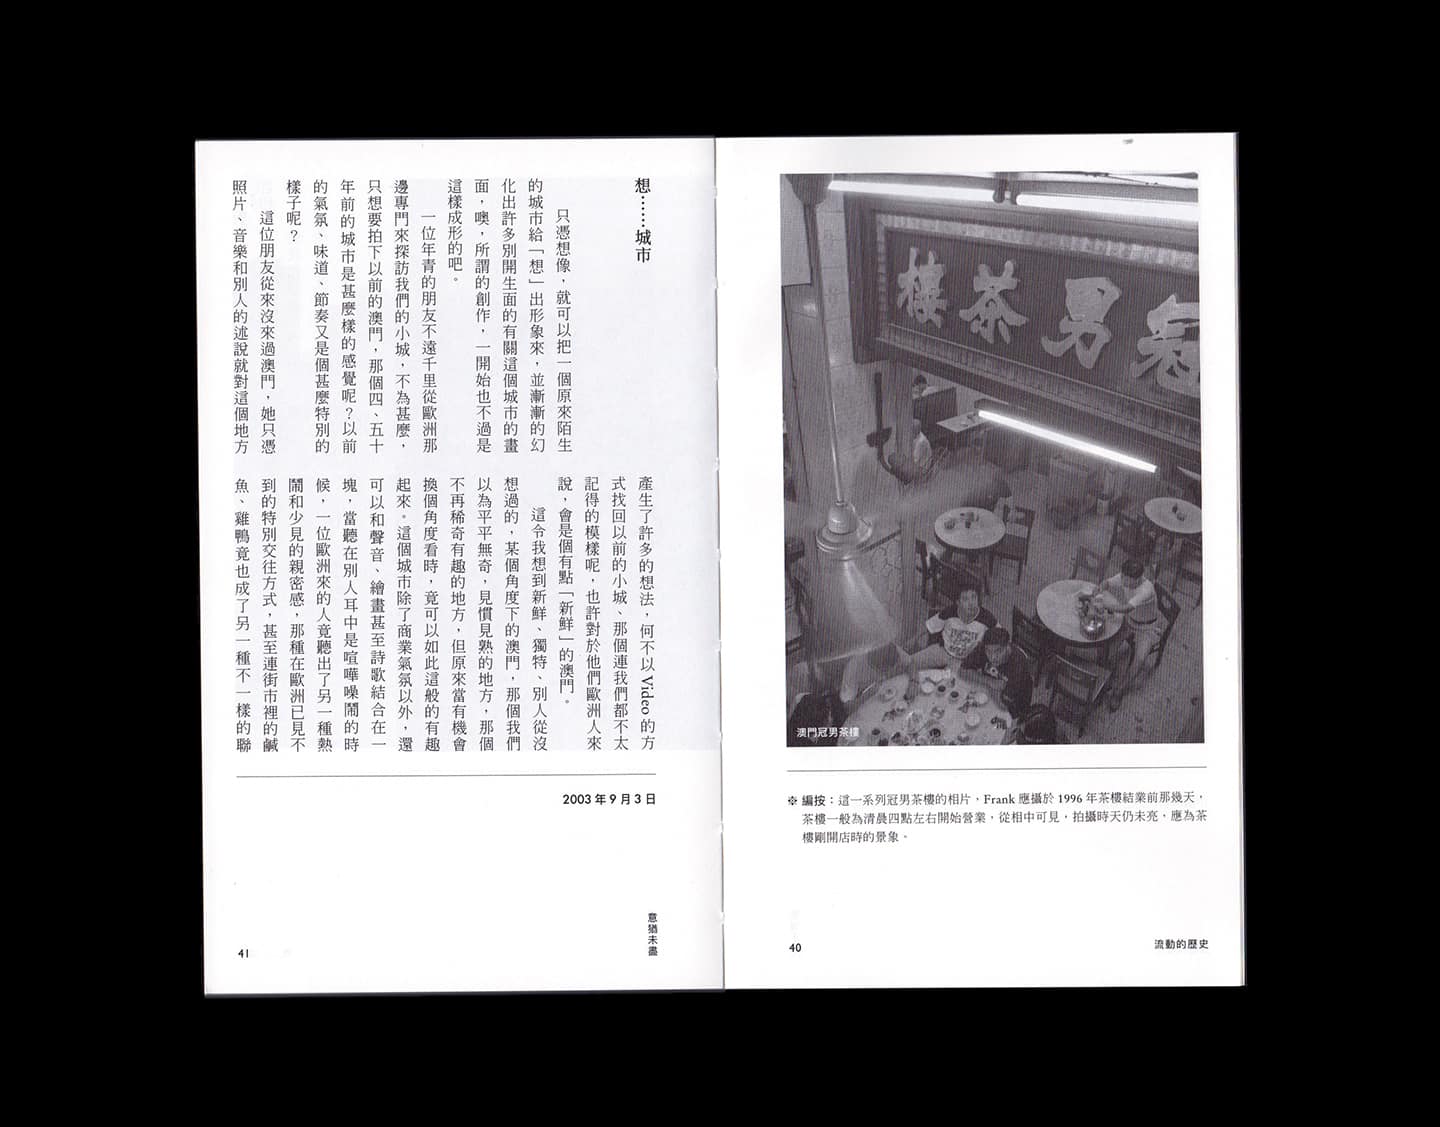 Macau book, Beyond the end of time, design by SomeythingMoon.com